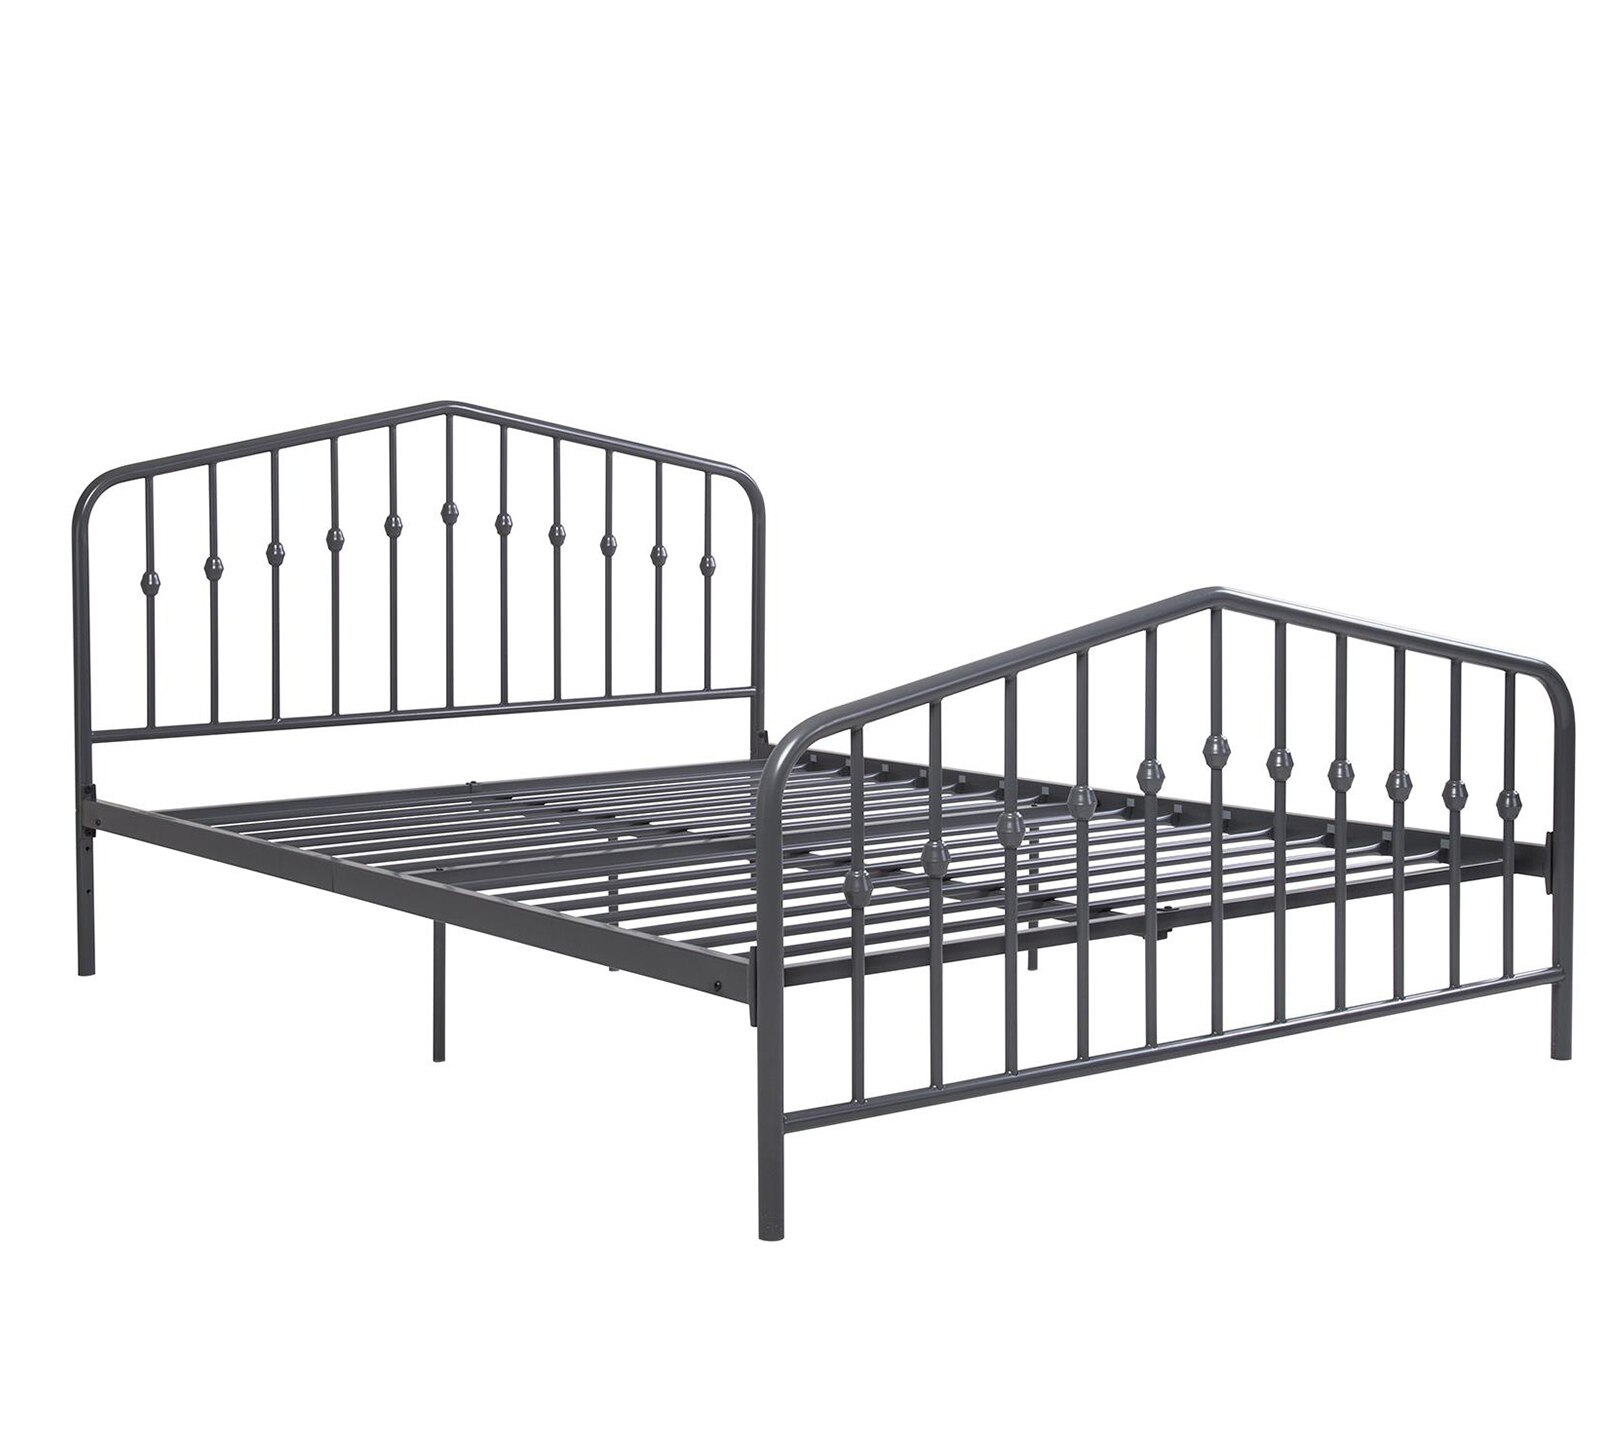 Bushwick Metal Bed